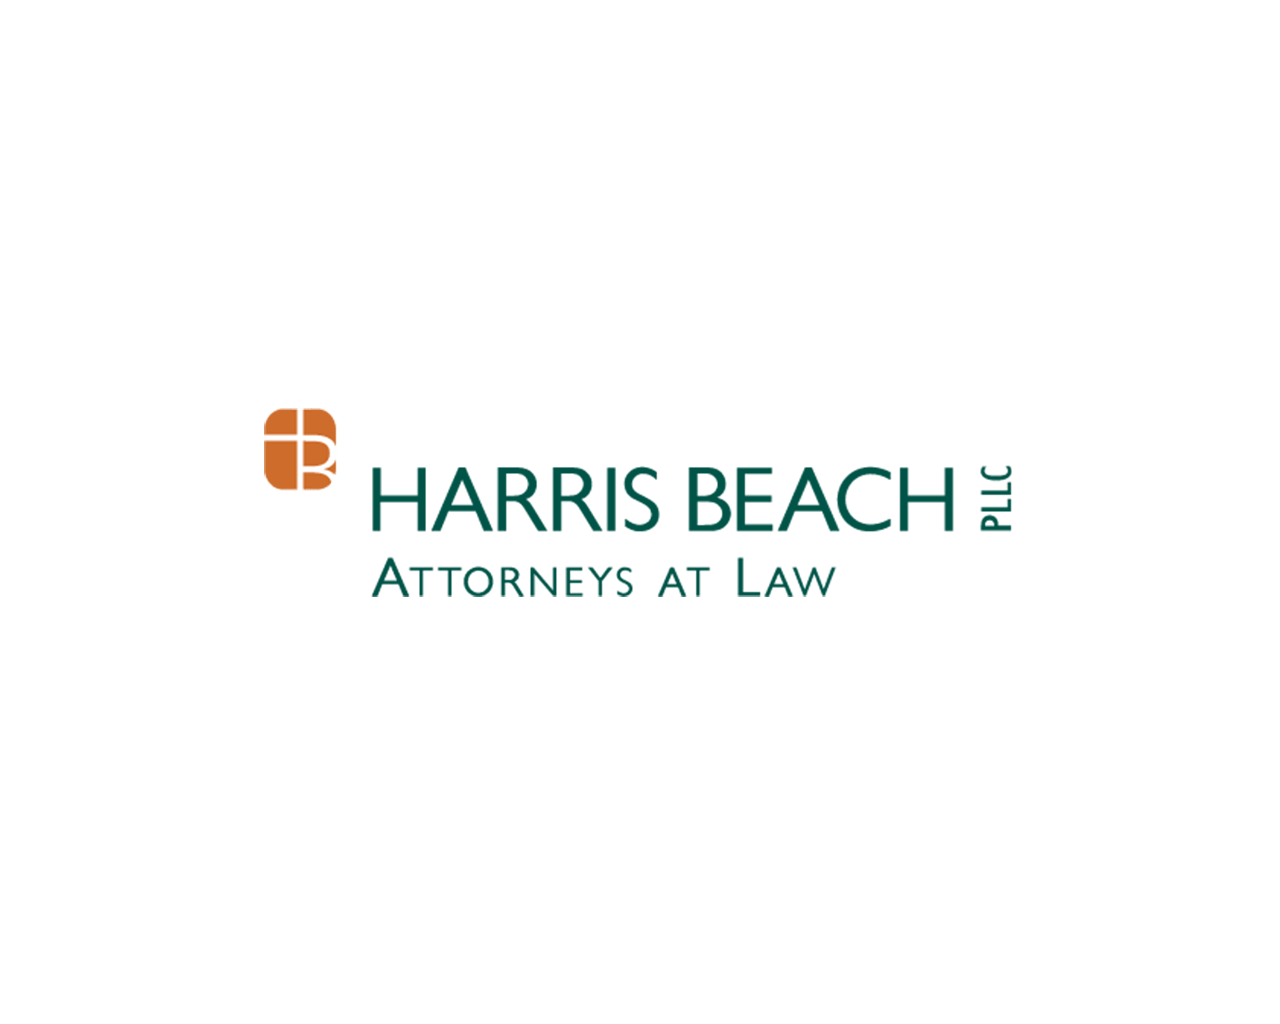 Harris Beach PLLC Attorneys at Law